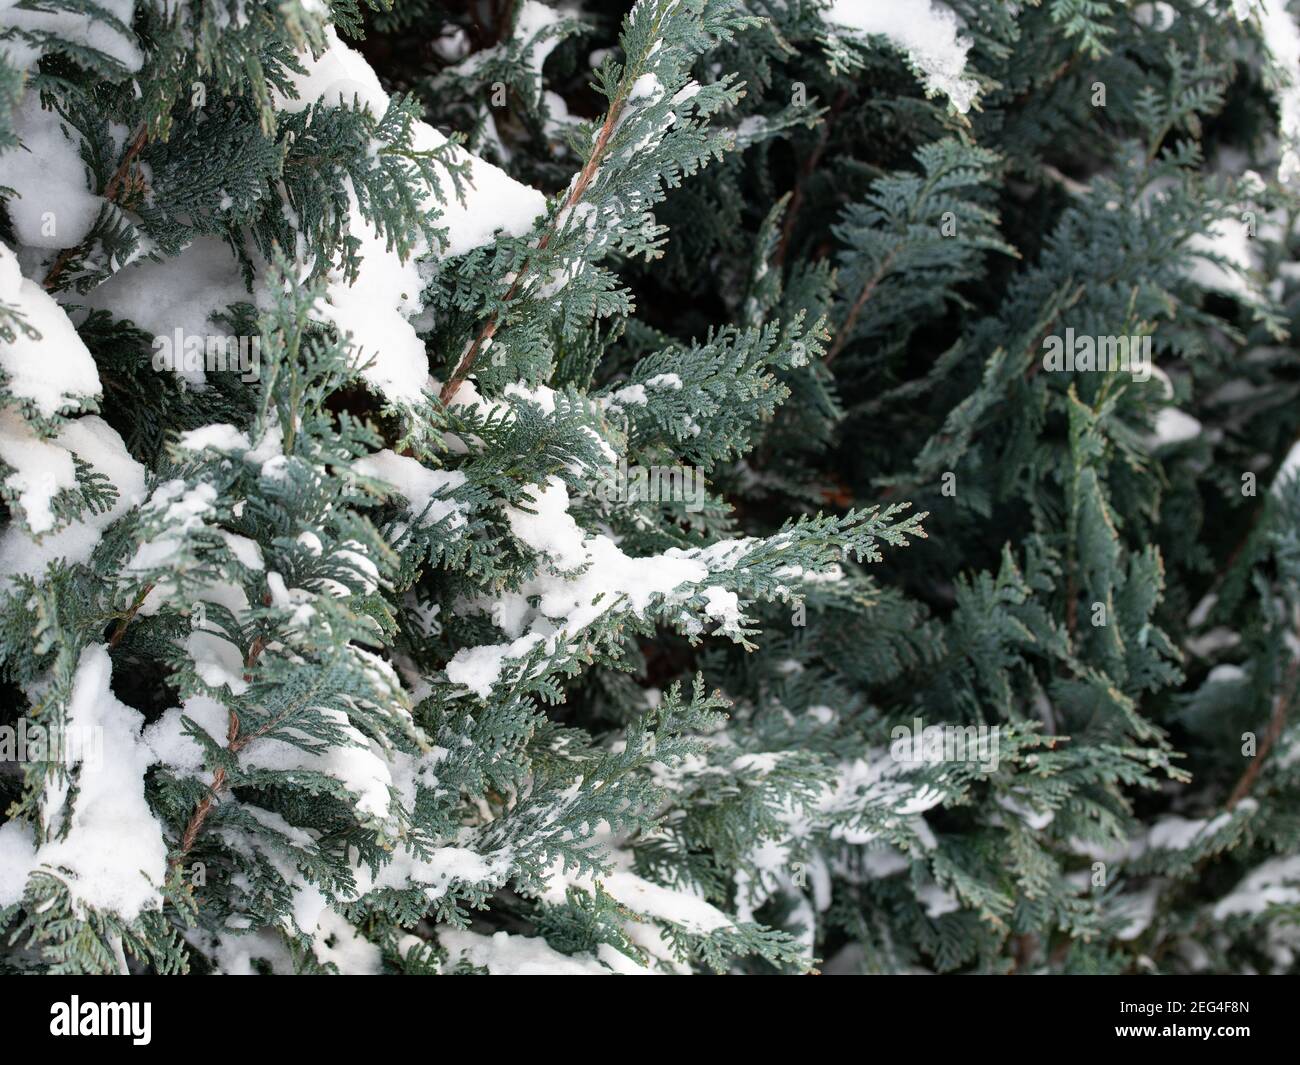 Occidental arborvitae, Thuja occidentalis, covered with snow Stock Photo